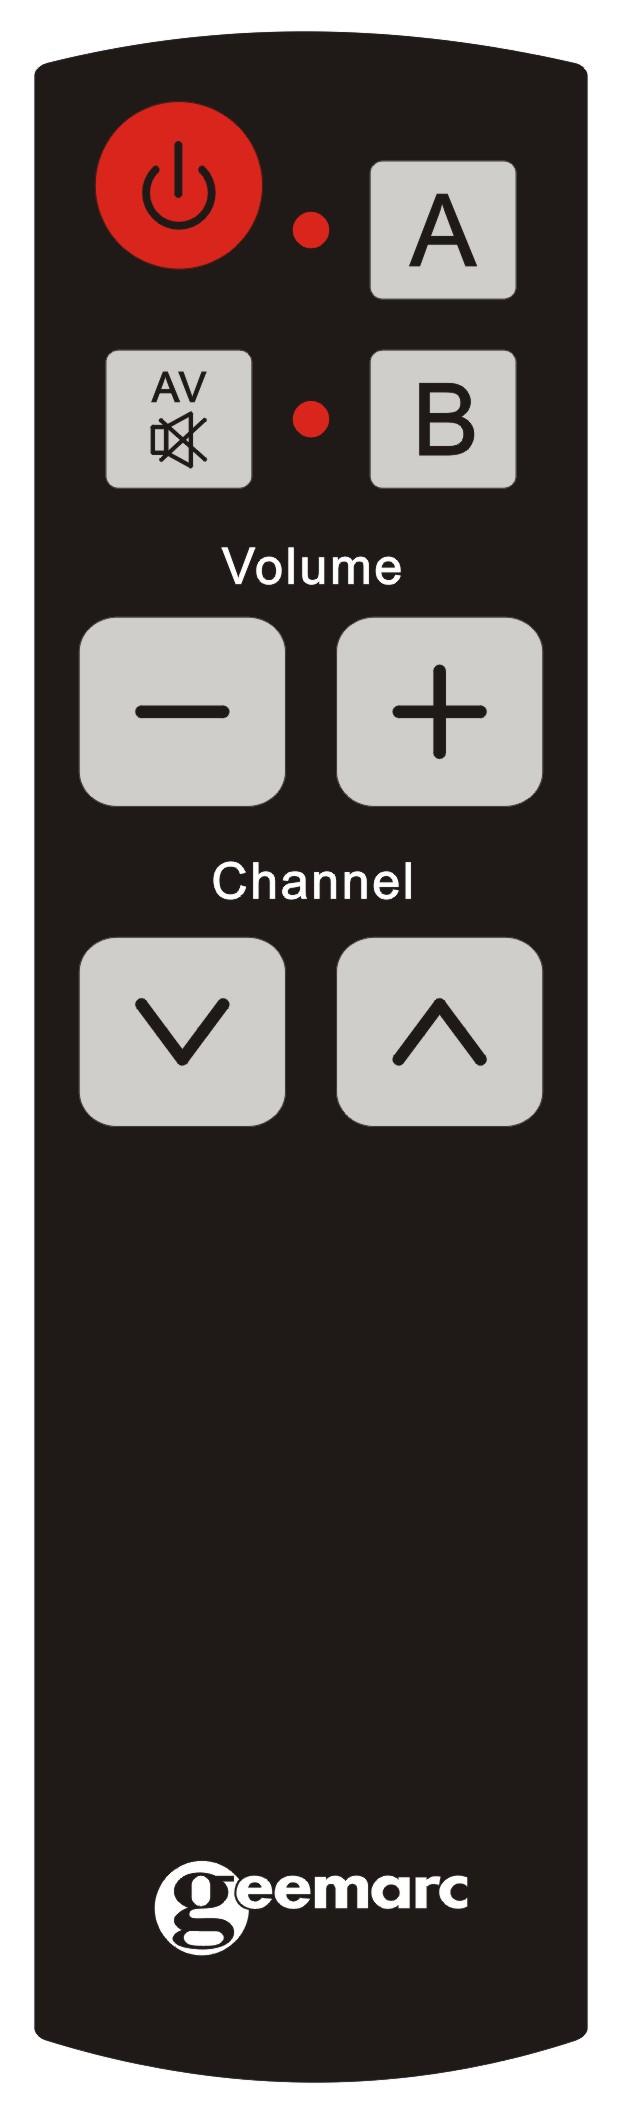 Easy TV5 remote